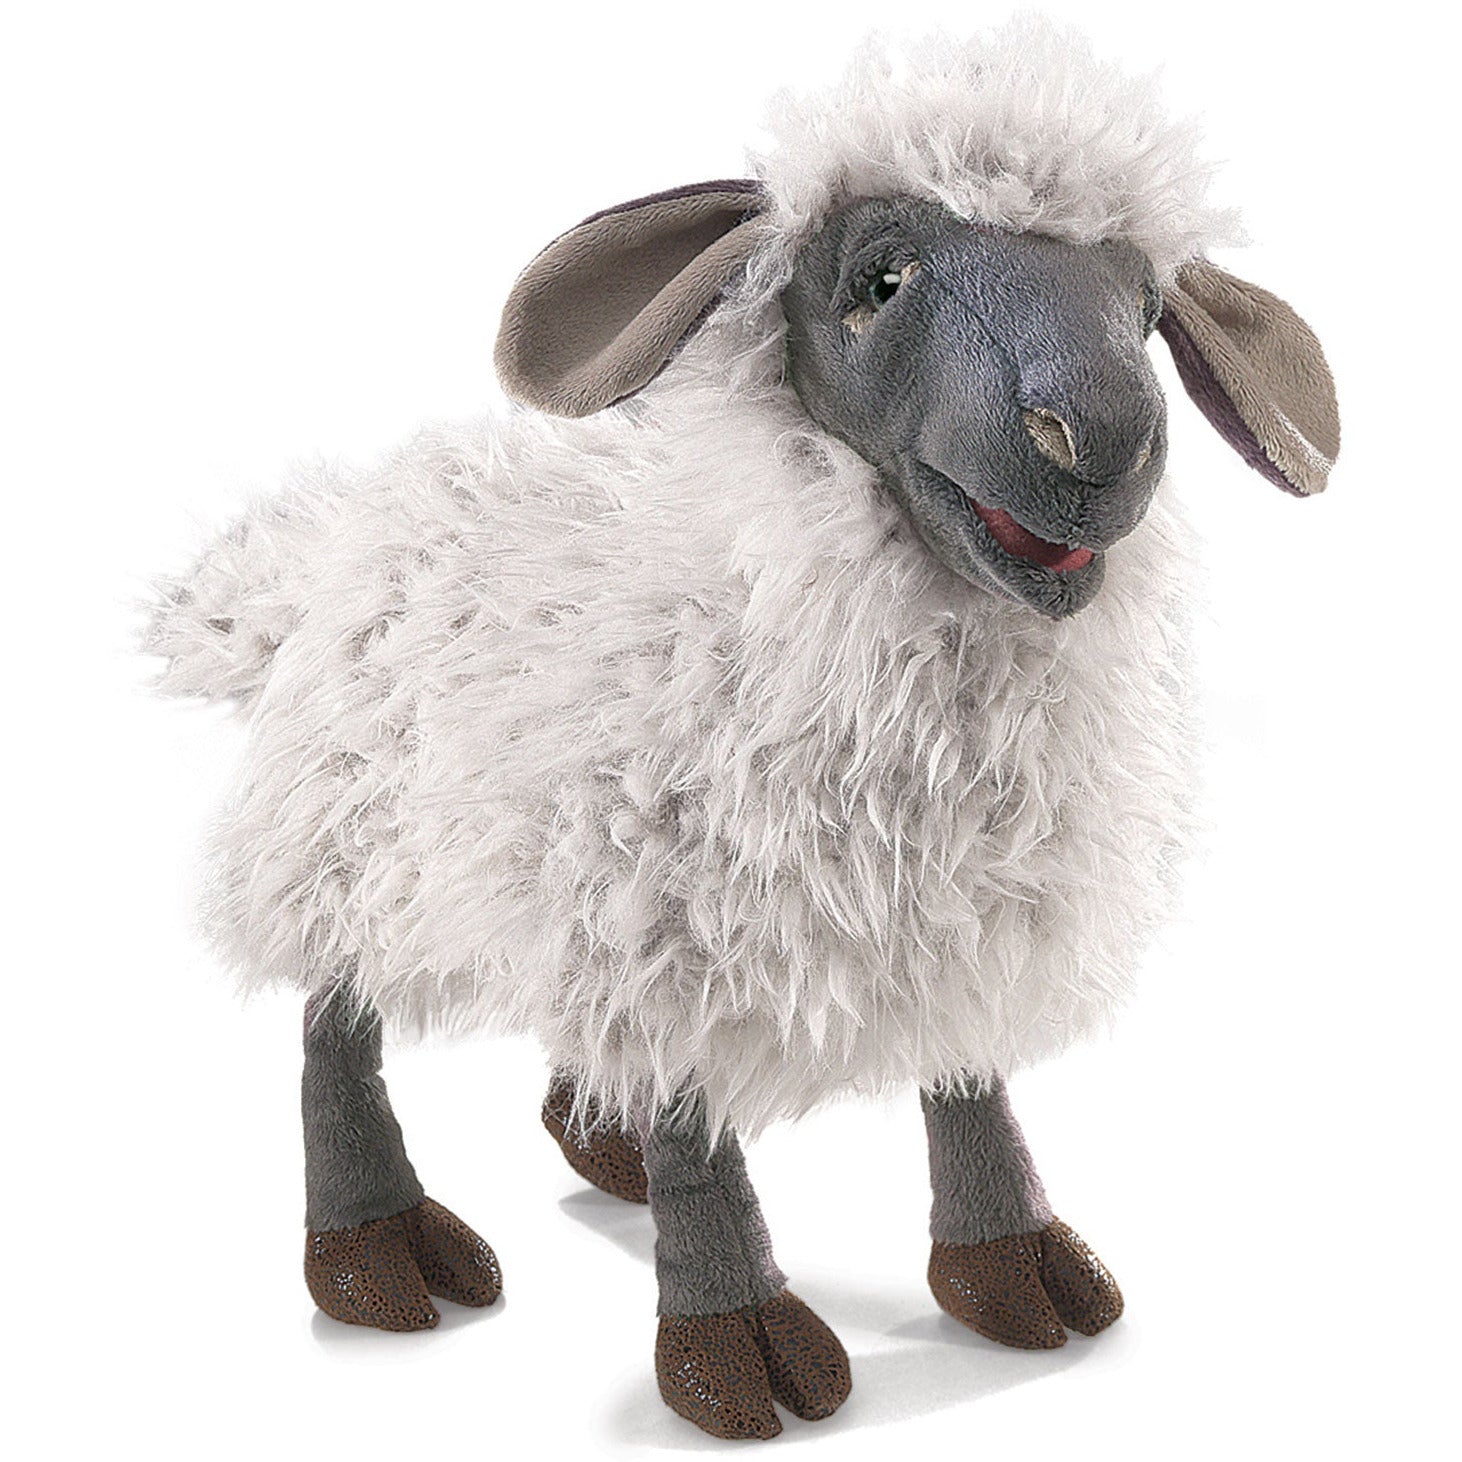 Folkmanis Puppets | Blökendes Schaf / Bleating Sheep